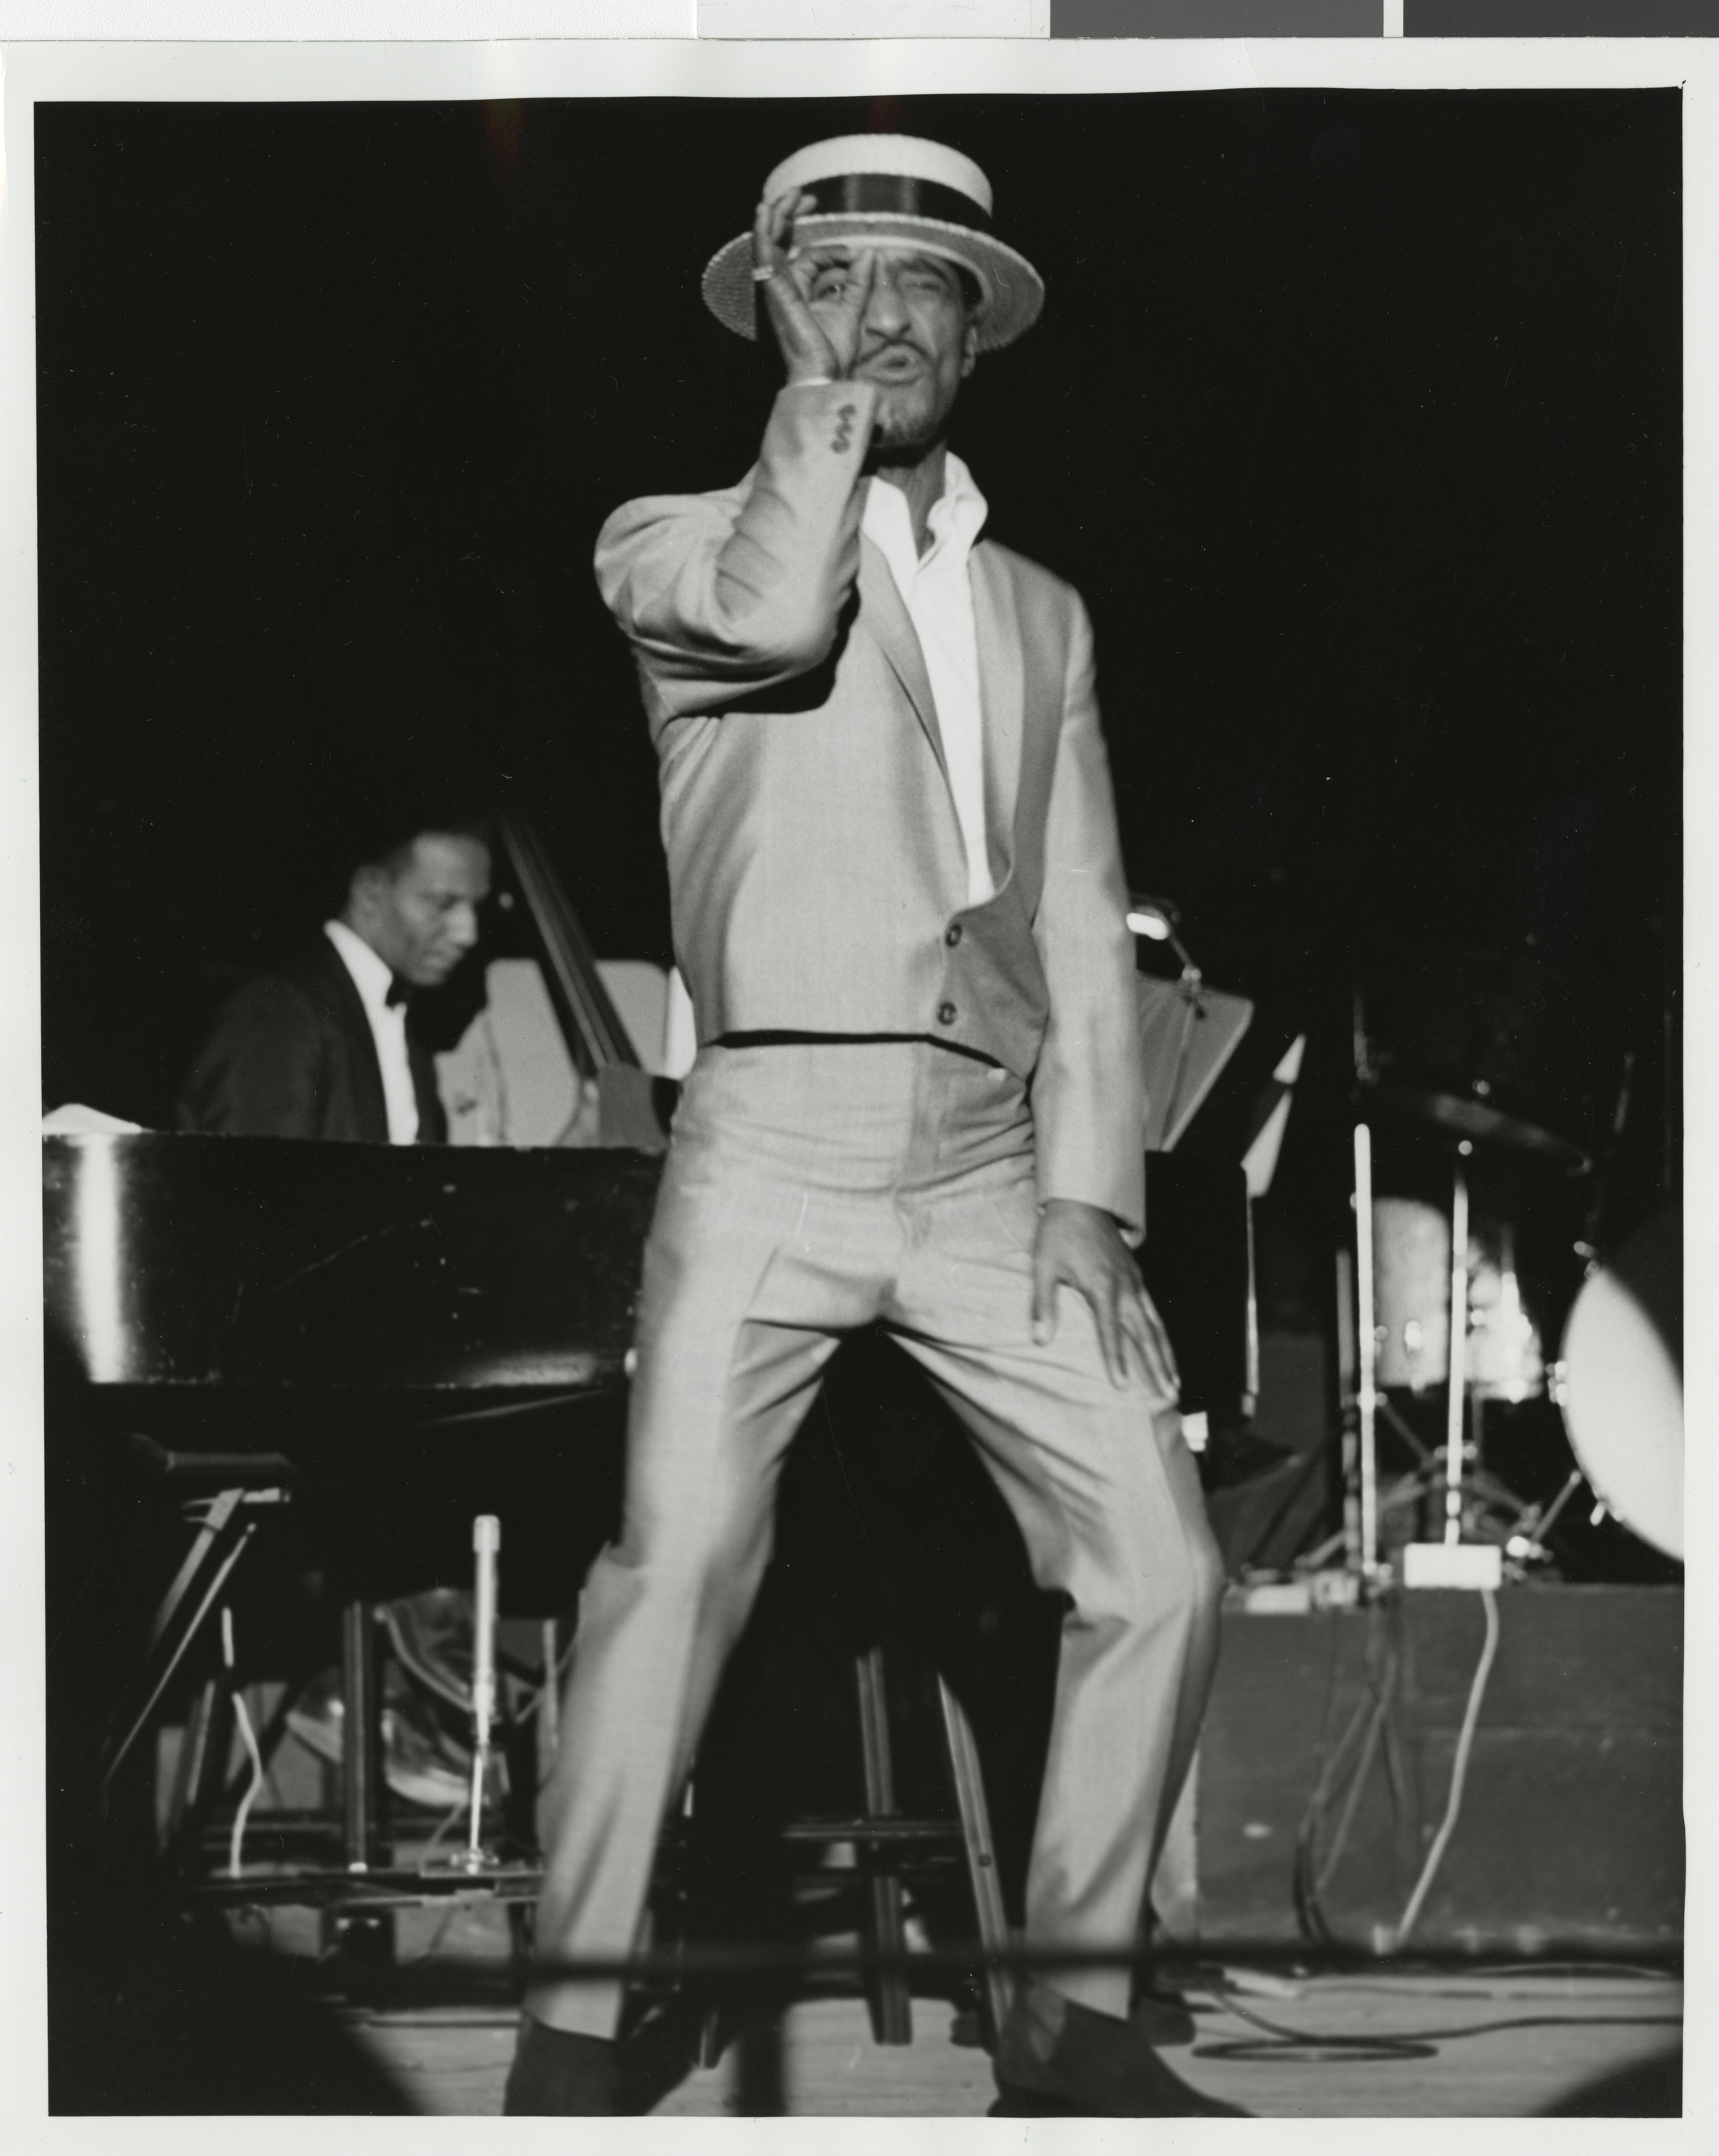 Davis on stage, Image 01